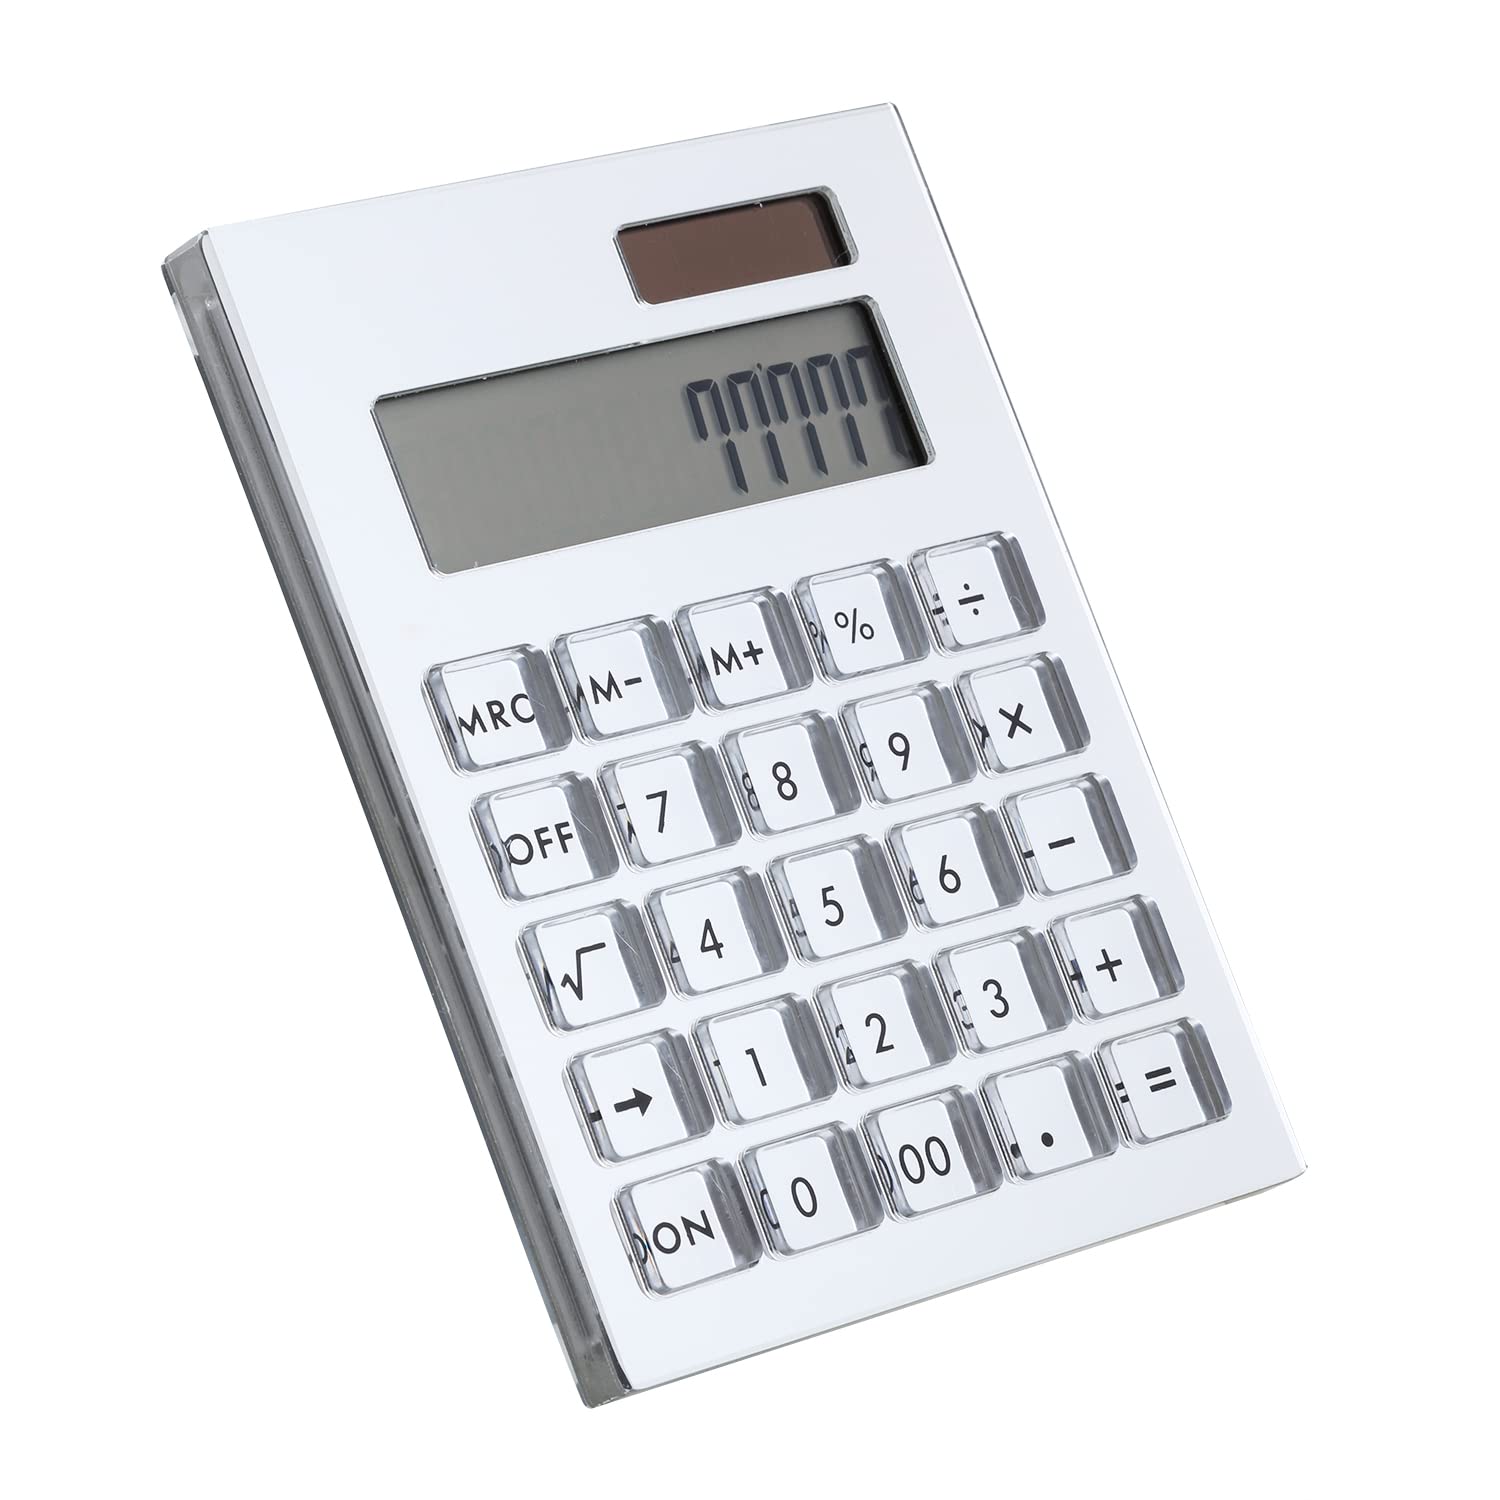 Clear Silver Acrylic Solar Power Calculator by DS DRAYMOND STORY - Home Office Desktop Calculator (12-Digit) - Business Gift Idea